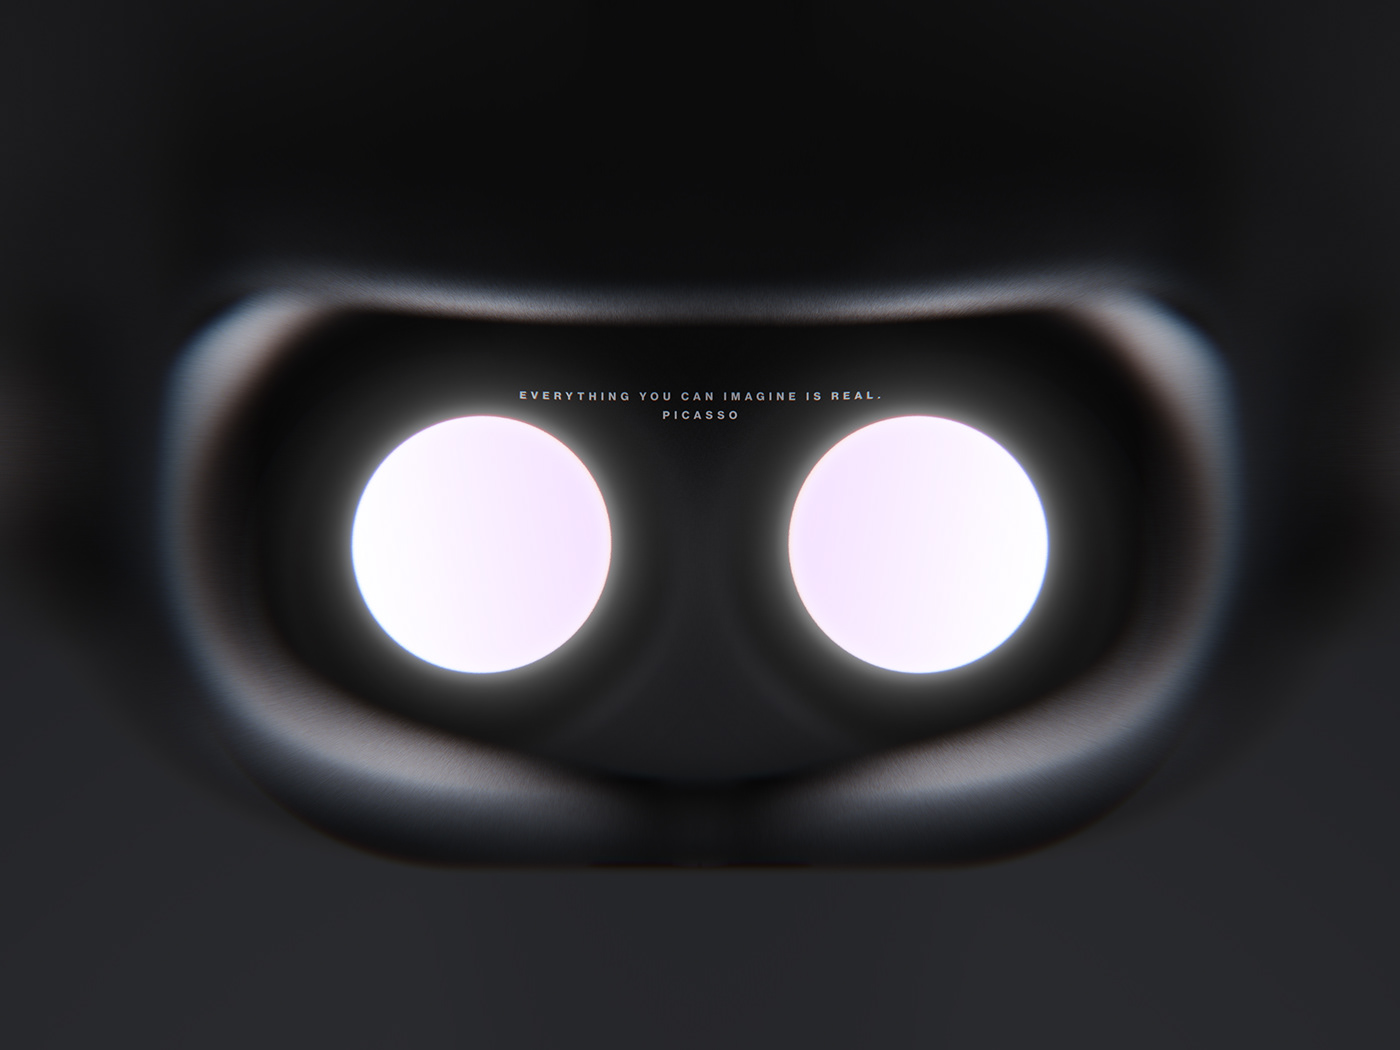 VR眼镜设计